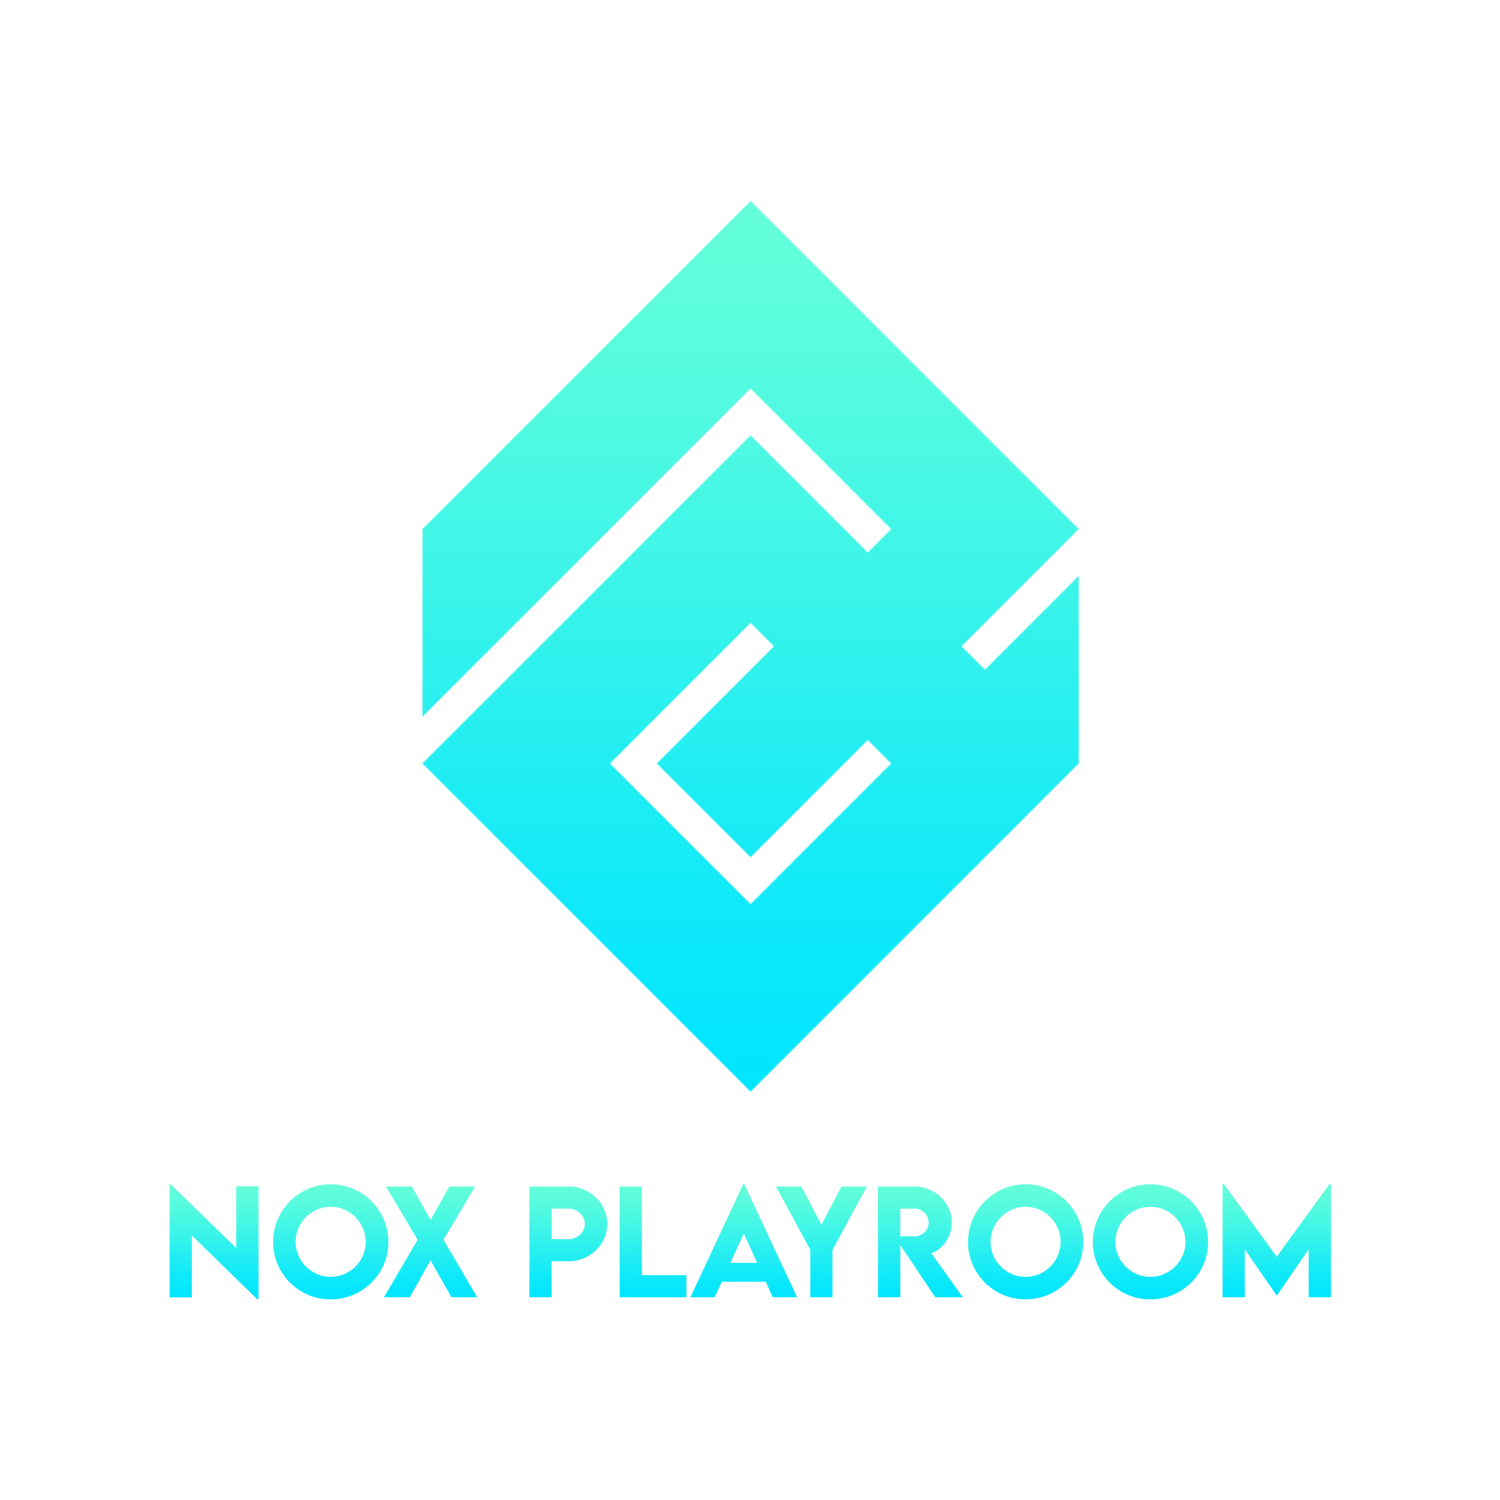 NOX PLAYROOM